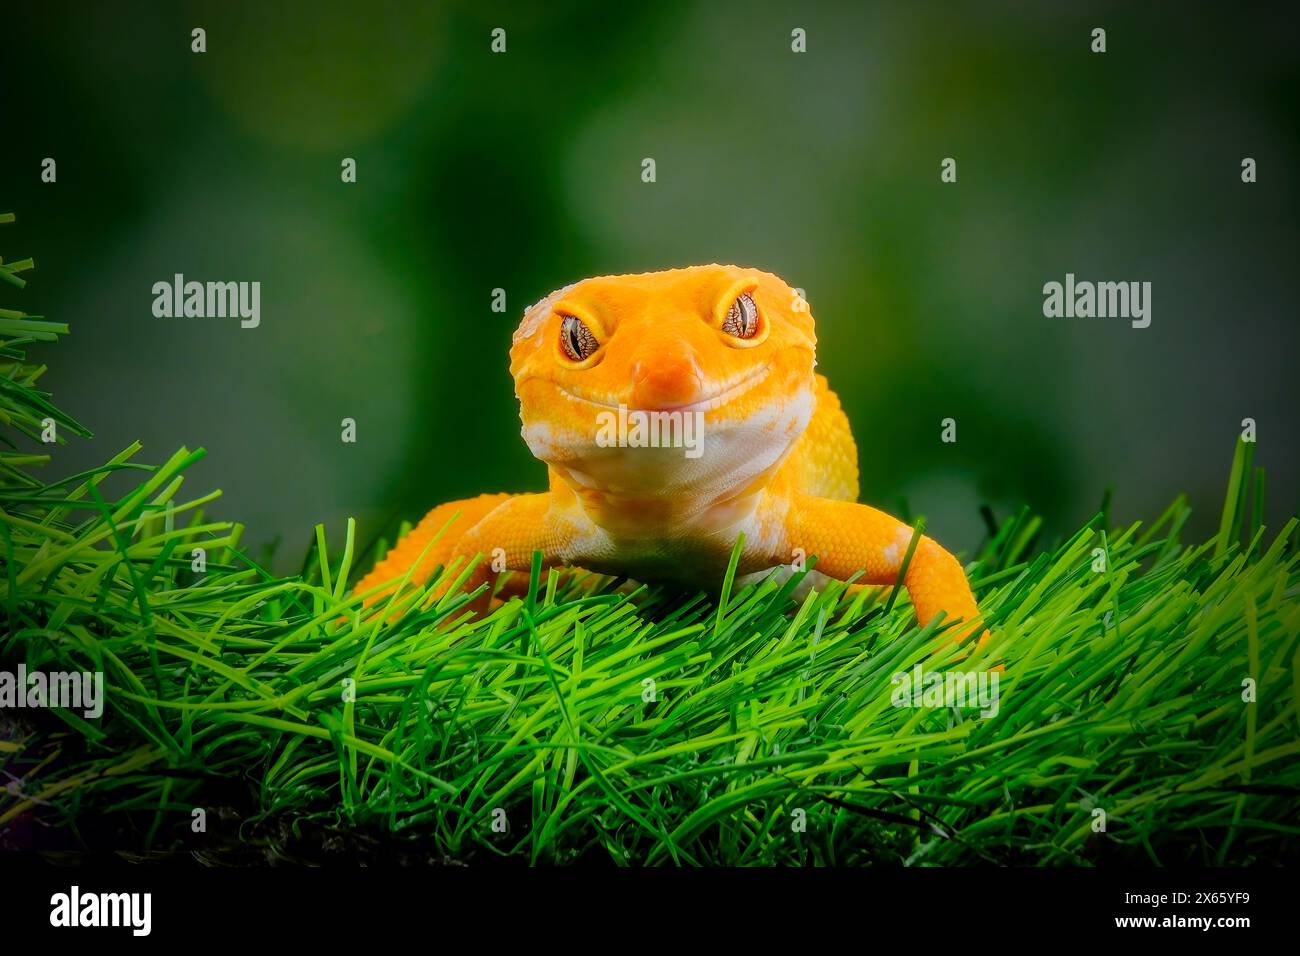 gecko on a green leaf Stock Photo